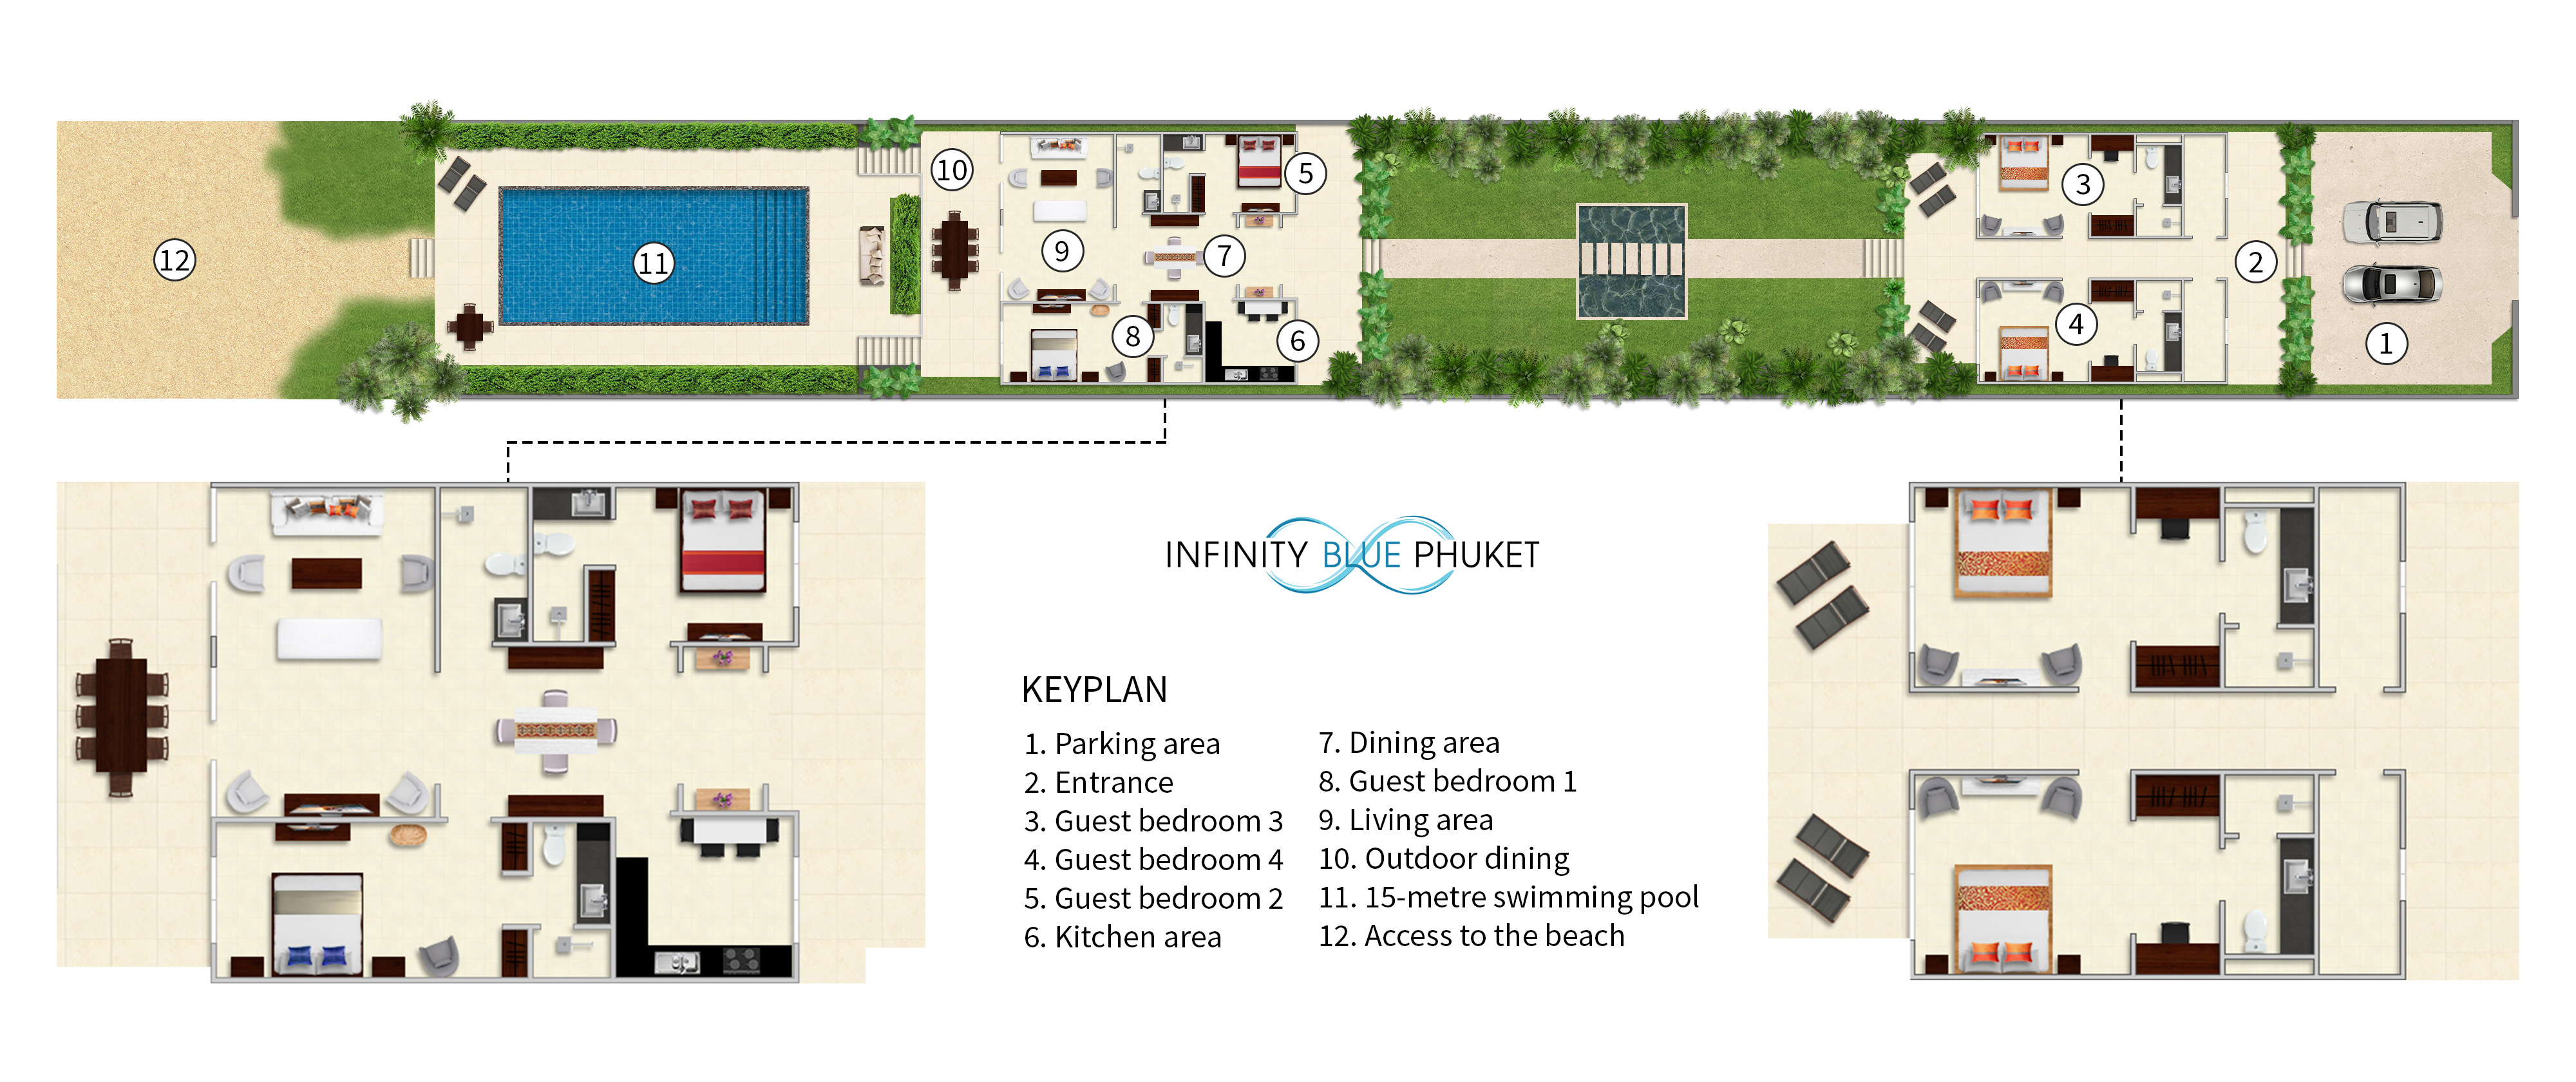 Infinity Blue Phuket - Floorplan